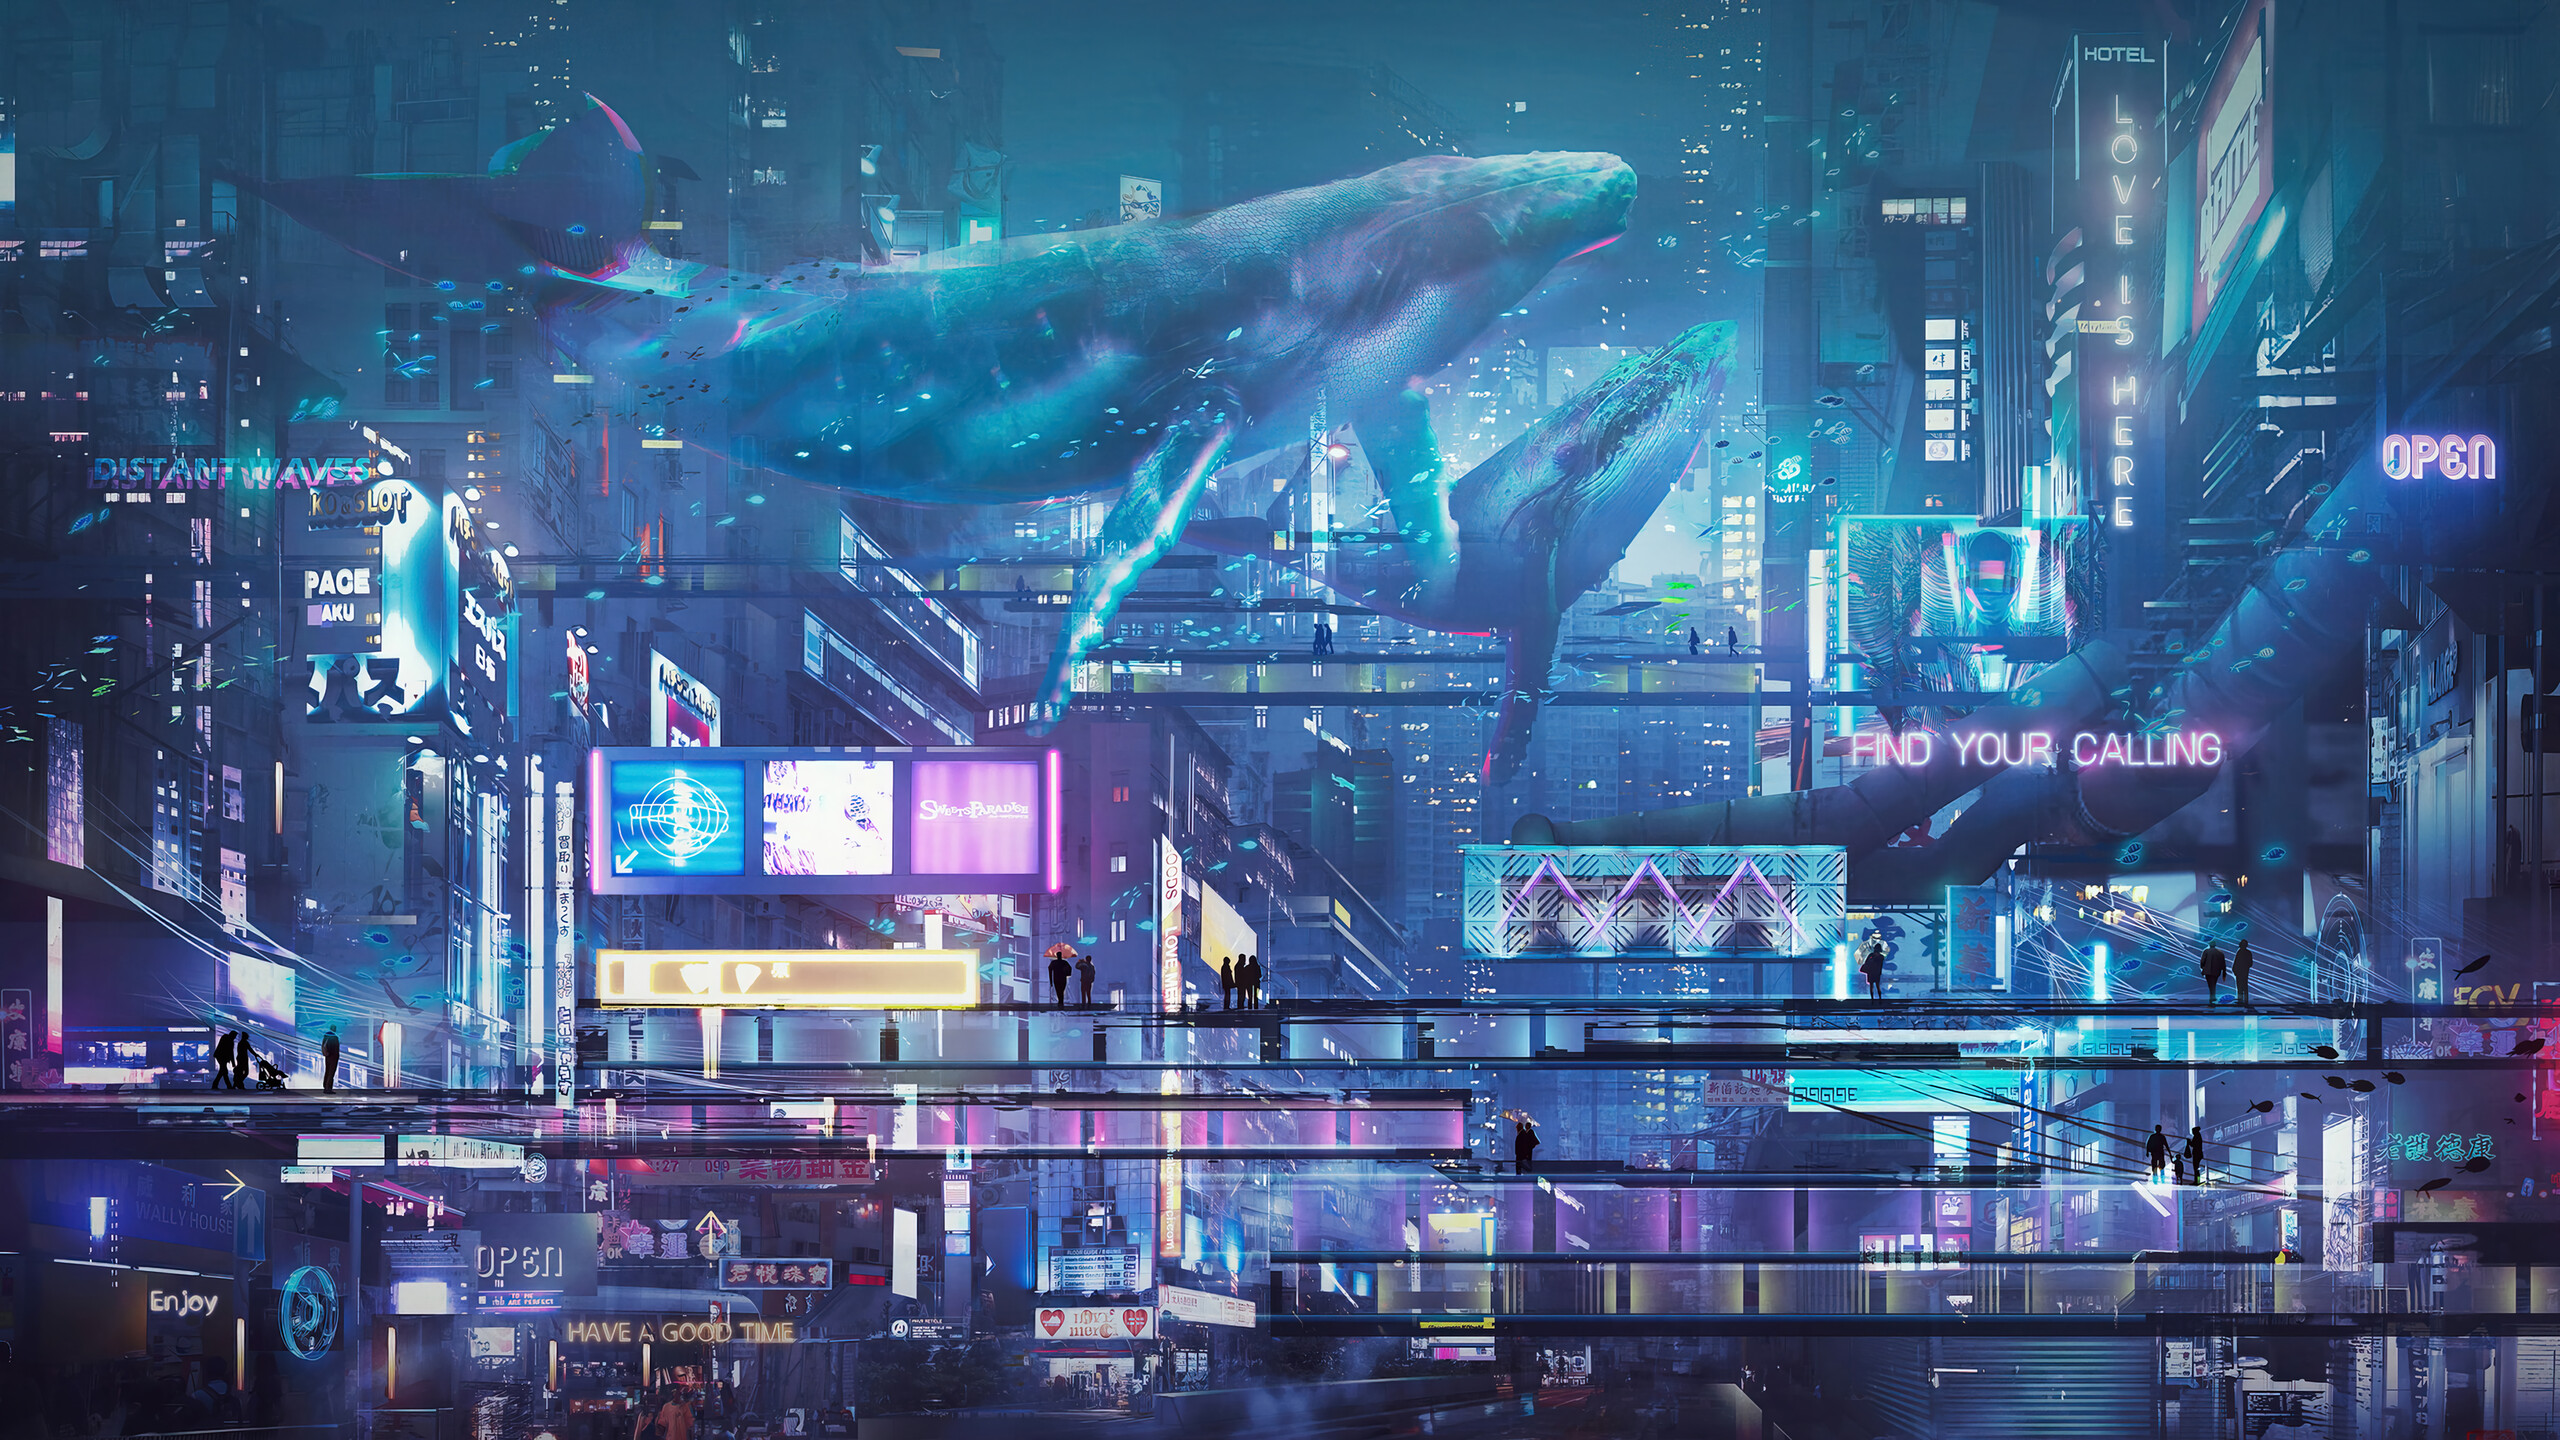 General 2560x1440 science fiction blue high tech city cyberpunk whale pink neon fantasy art futuristic digital art